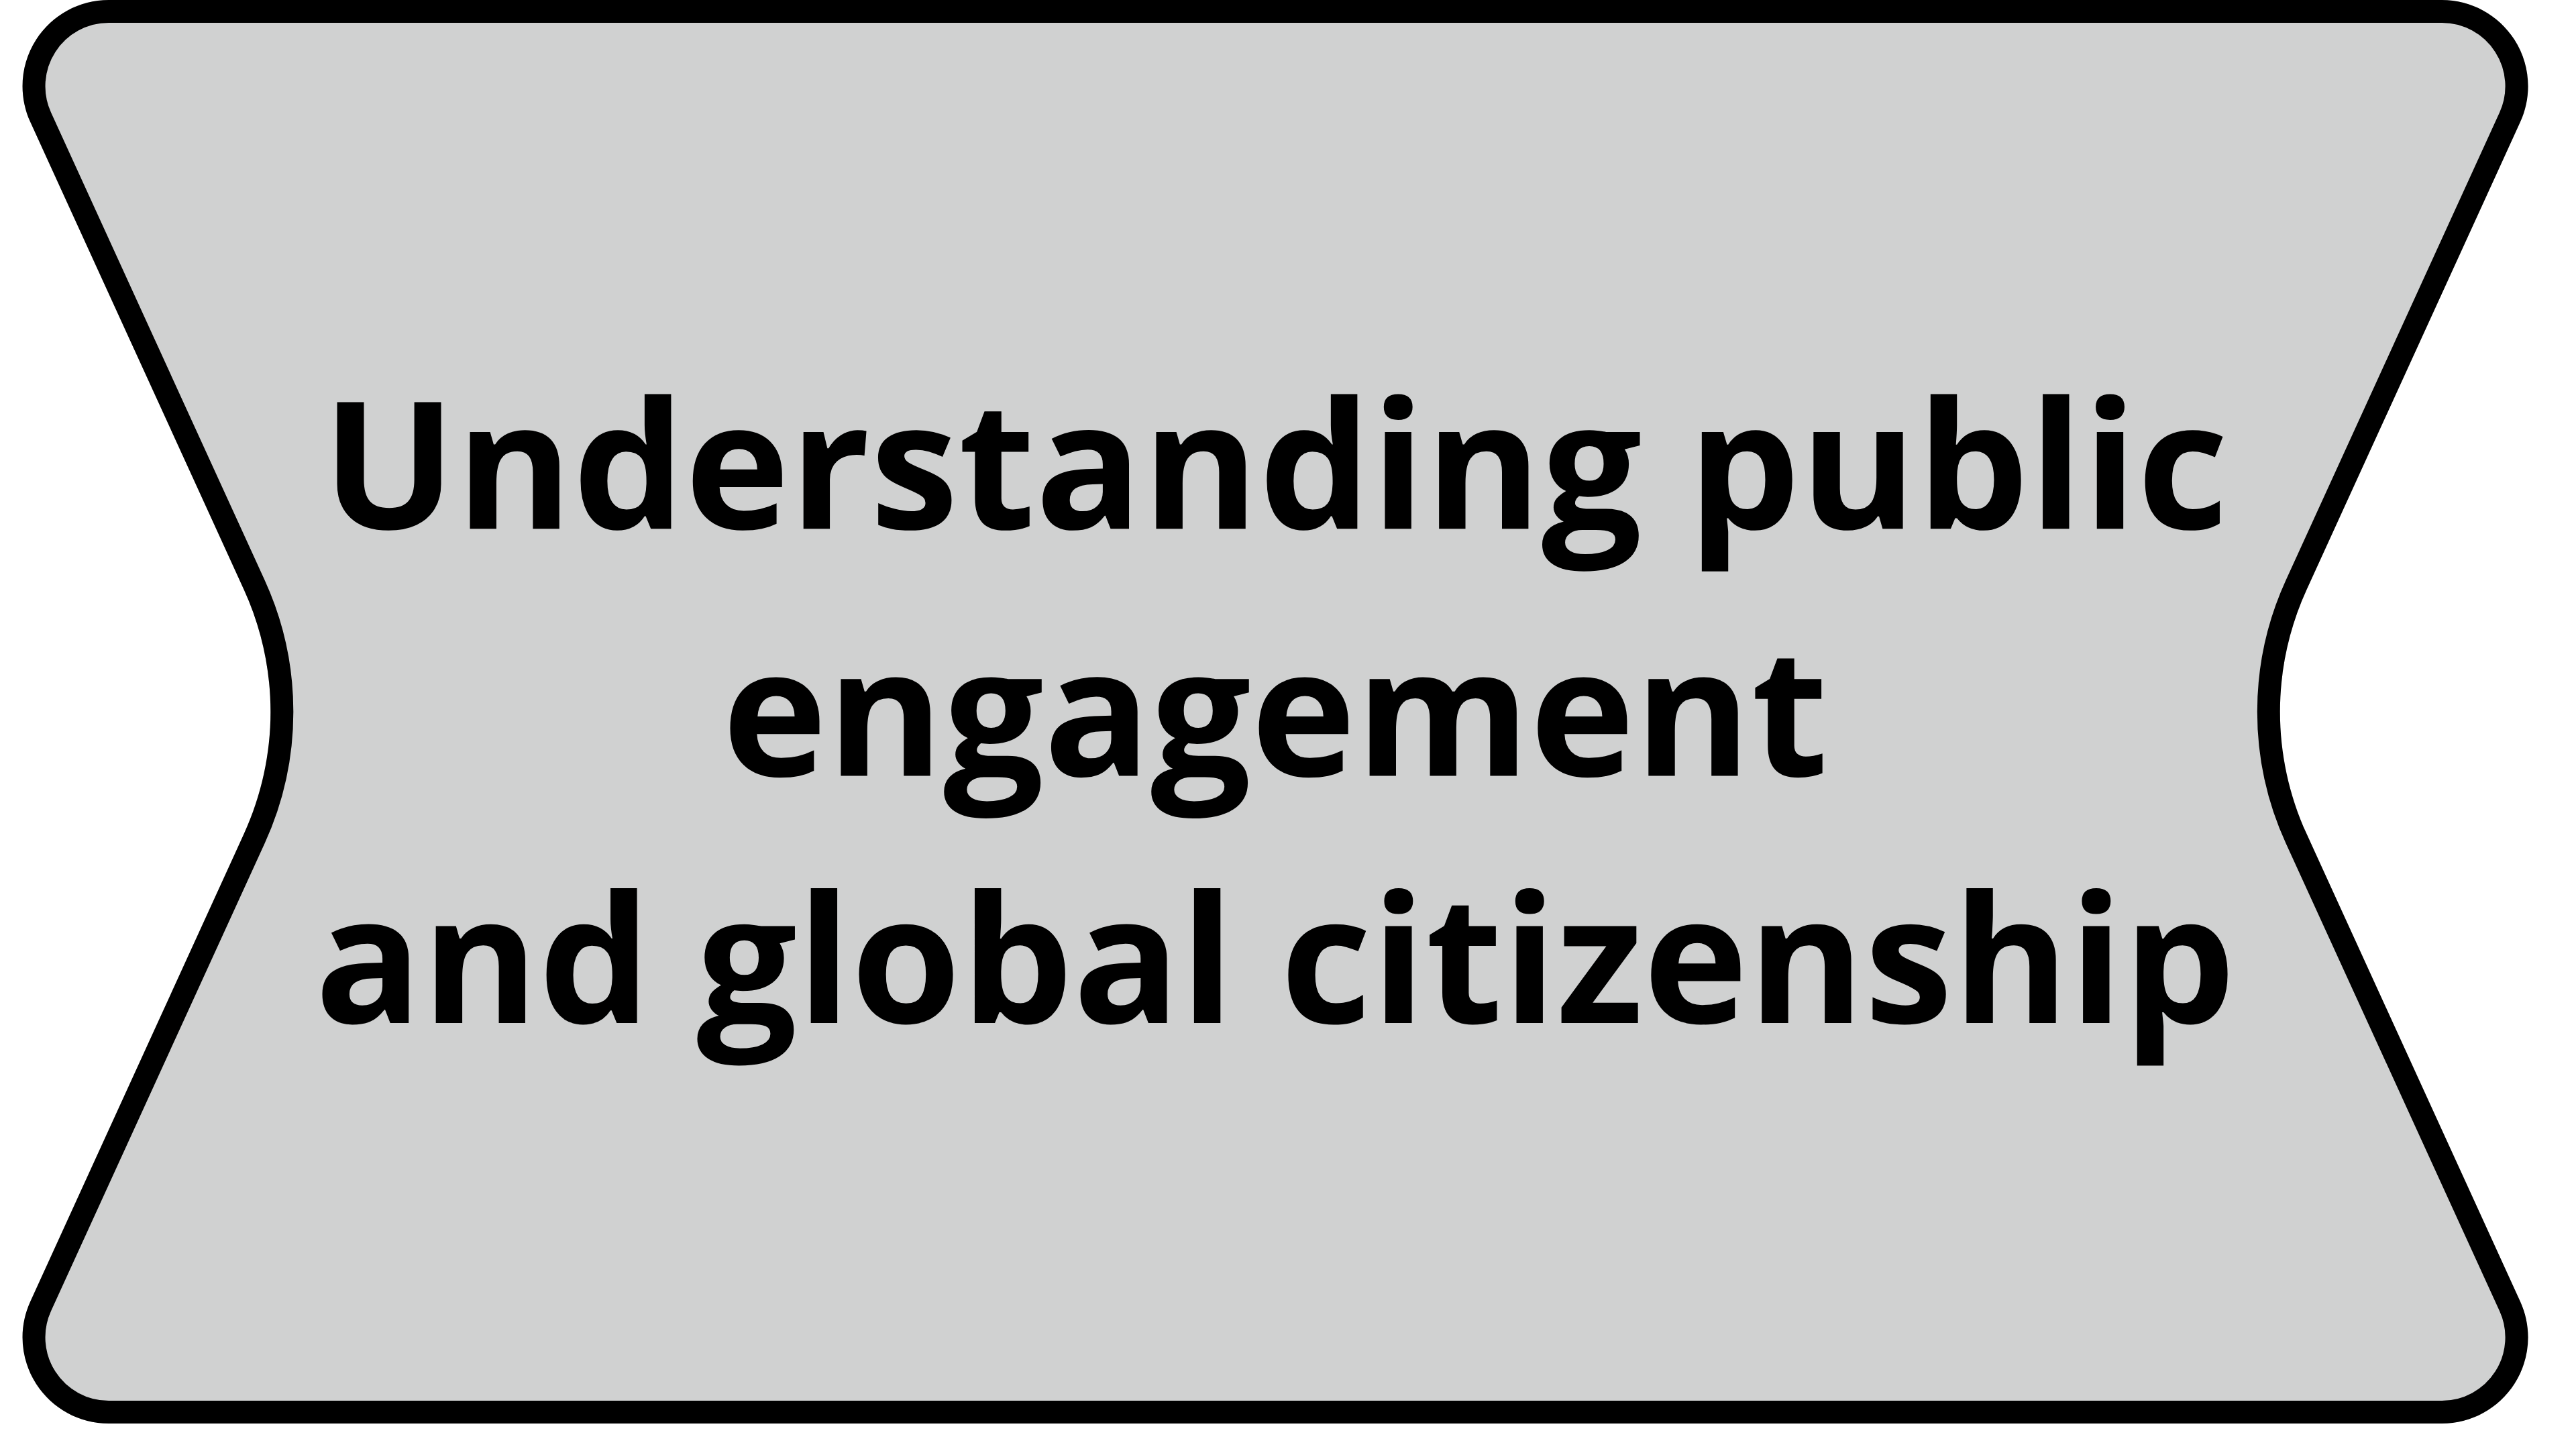 1.1 – Understanding public engagement and global citizenship